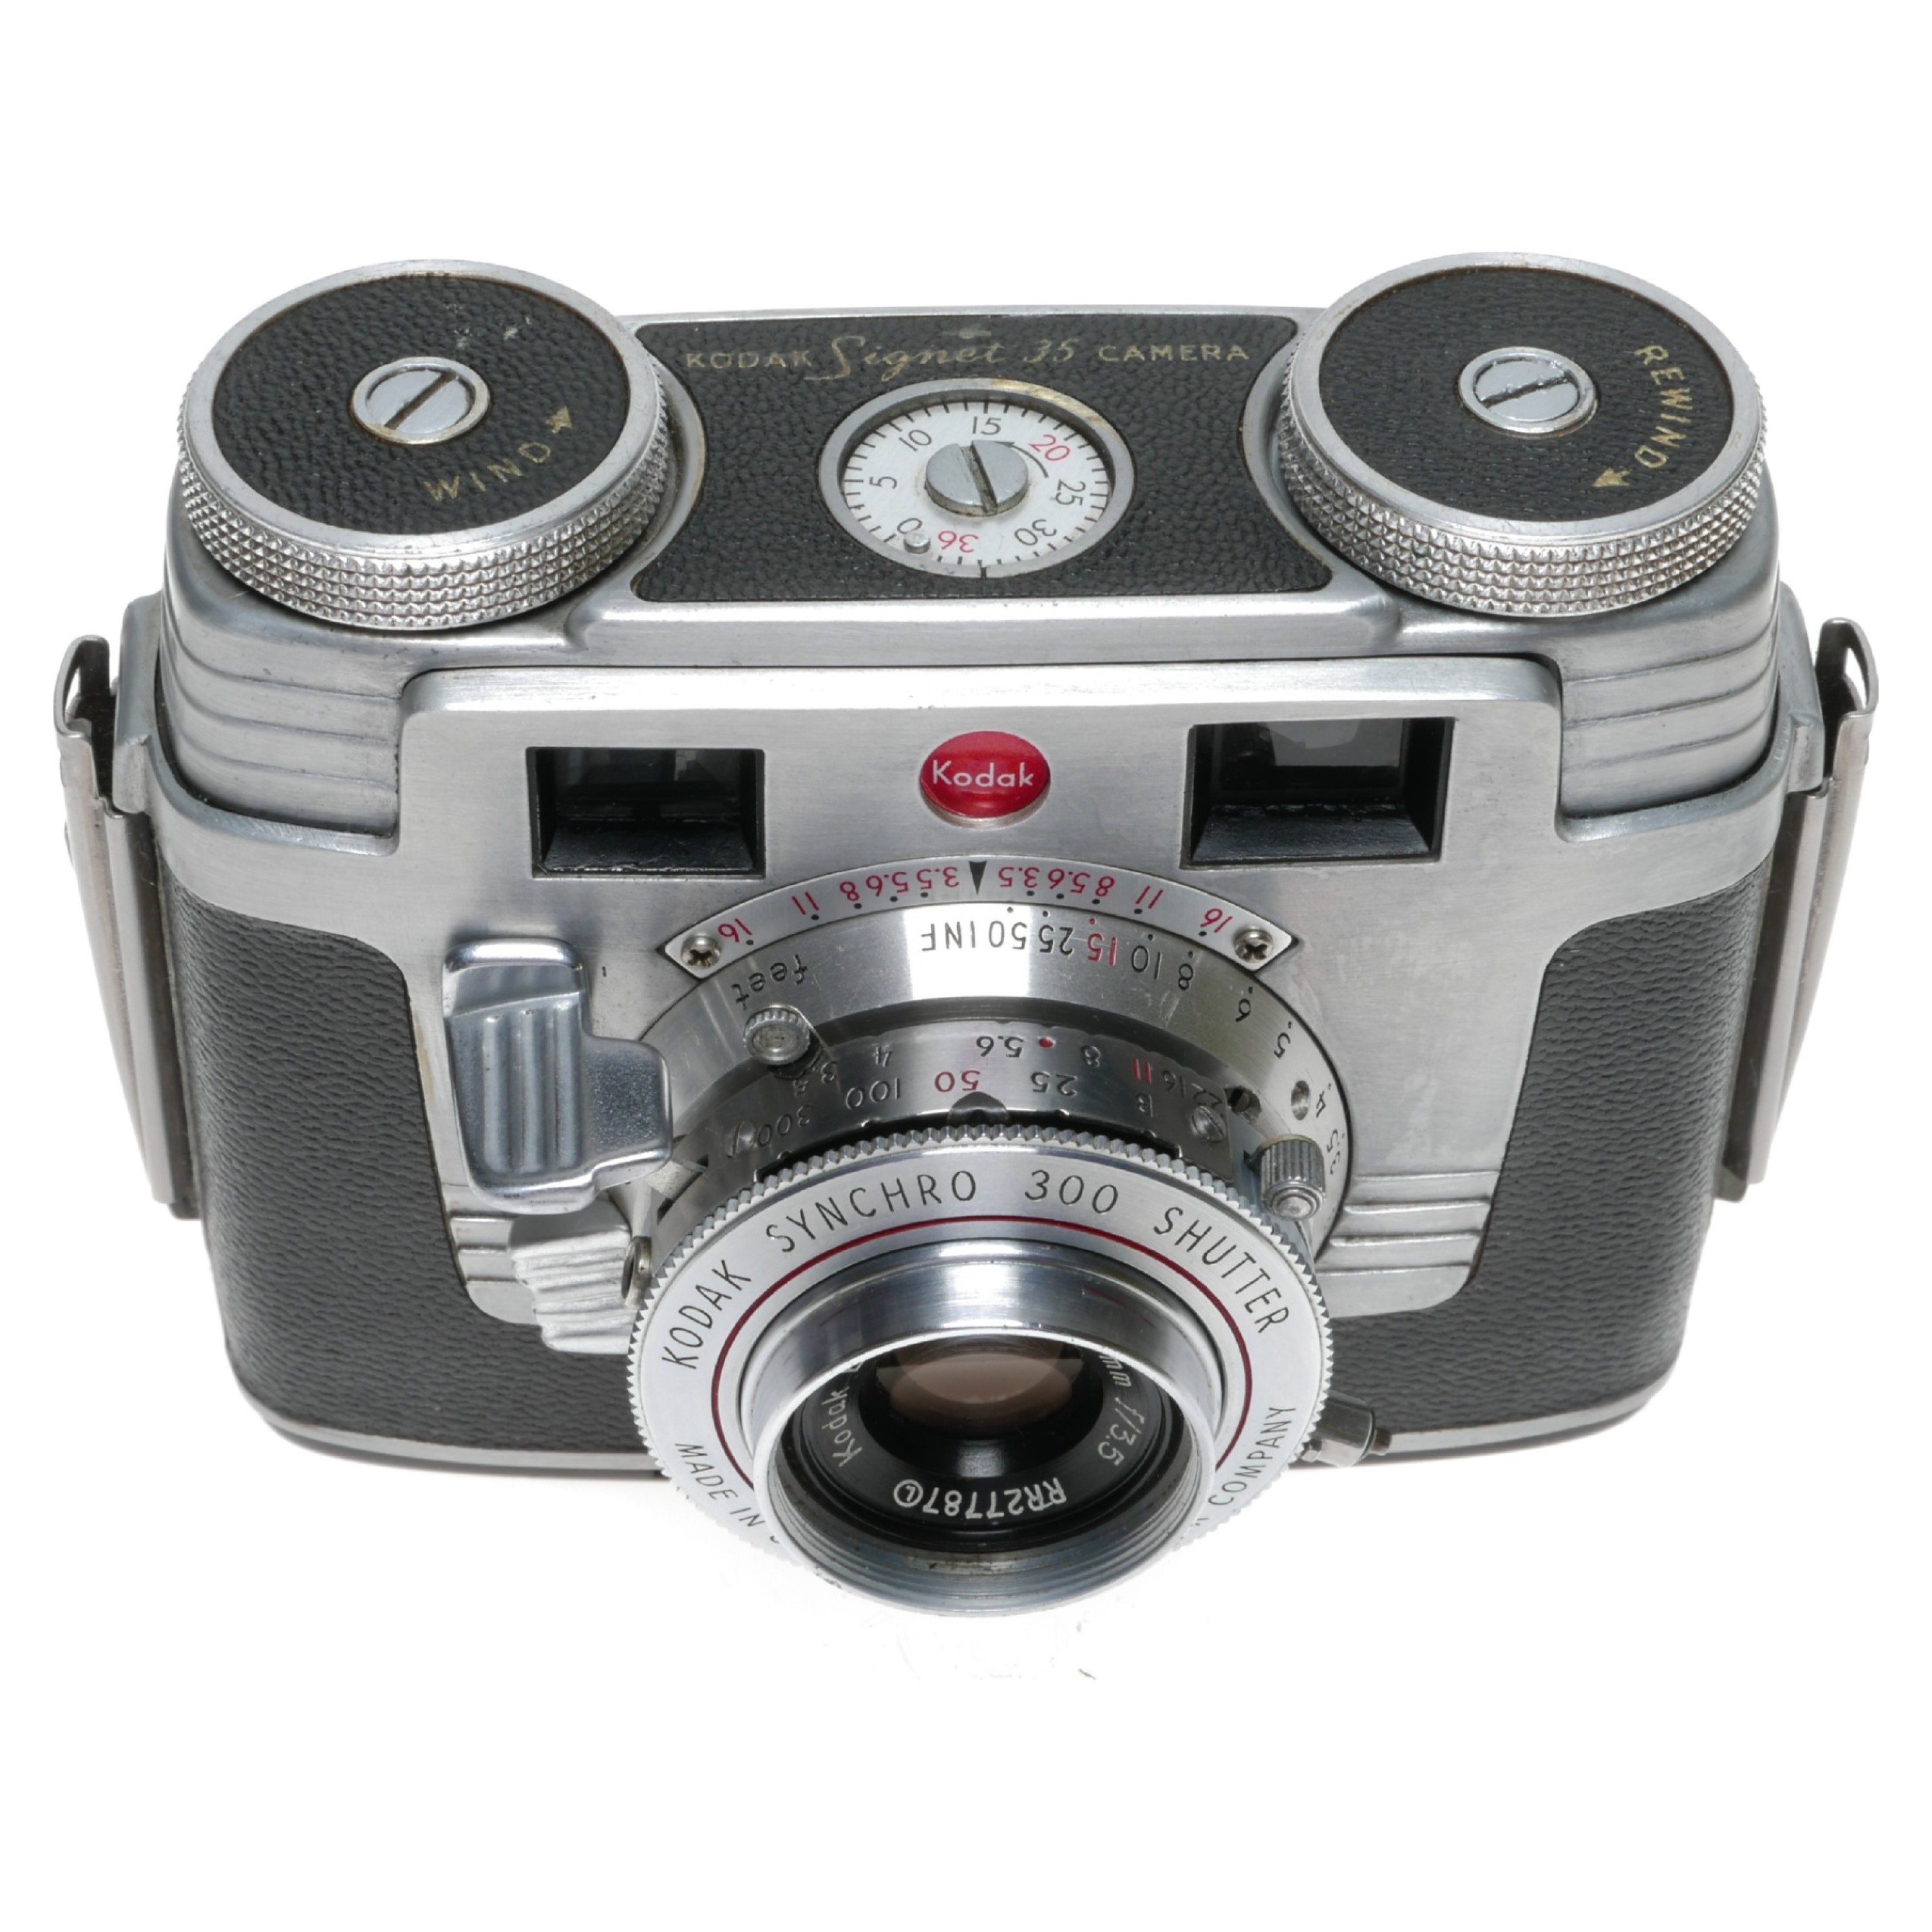 Kodak Signet 35 Rangefinder Camera Ektar f:3.5 44mm